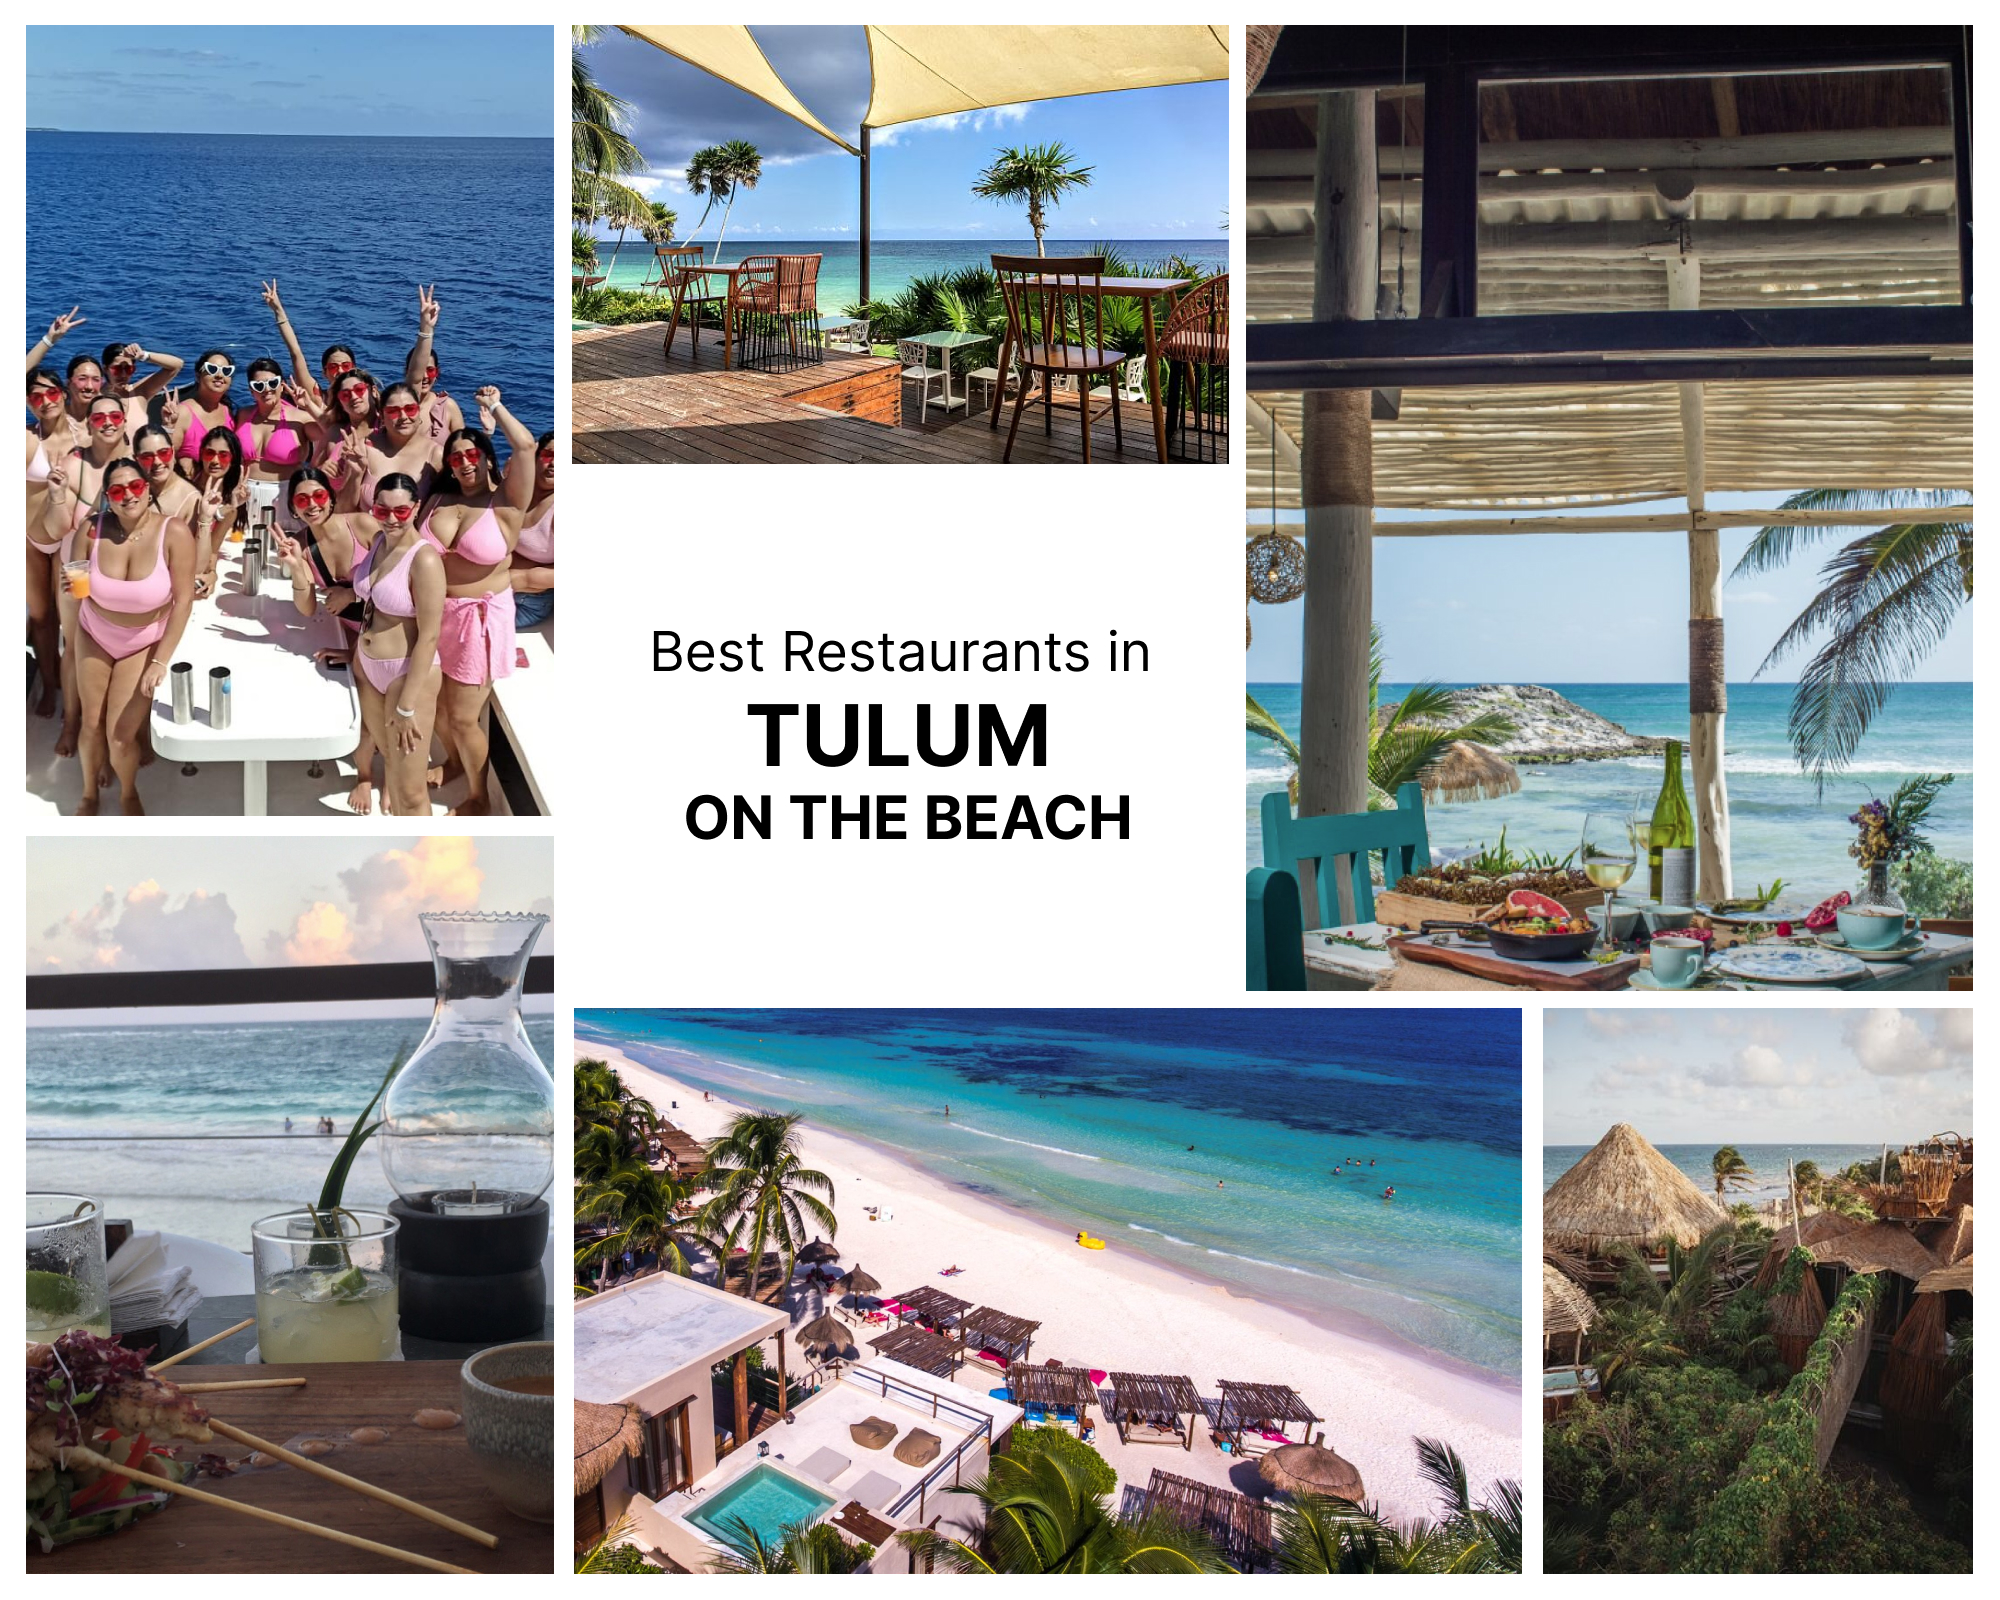 Best Restaurants in Tulum on the Beach